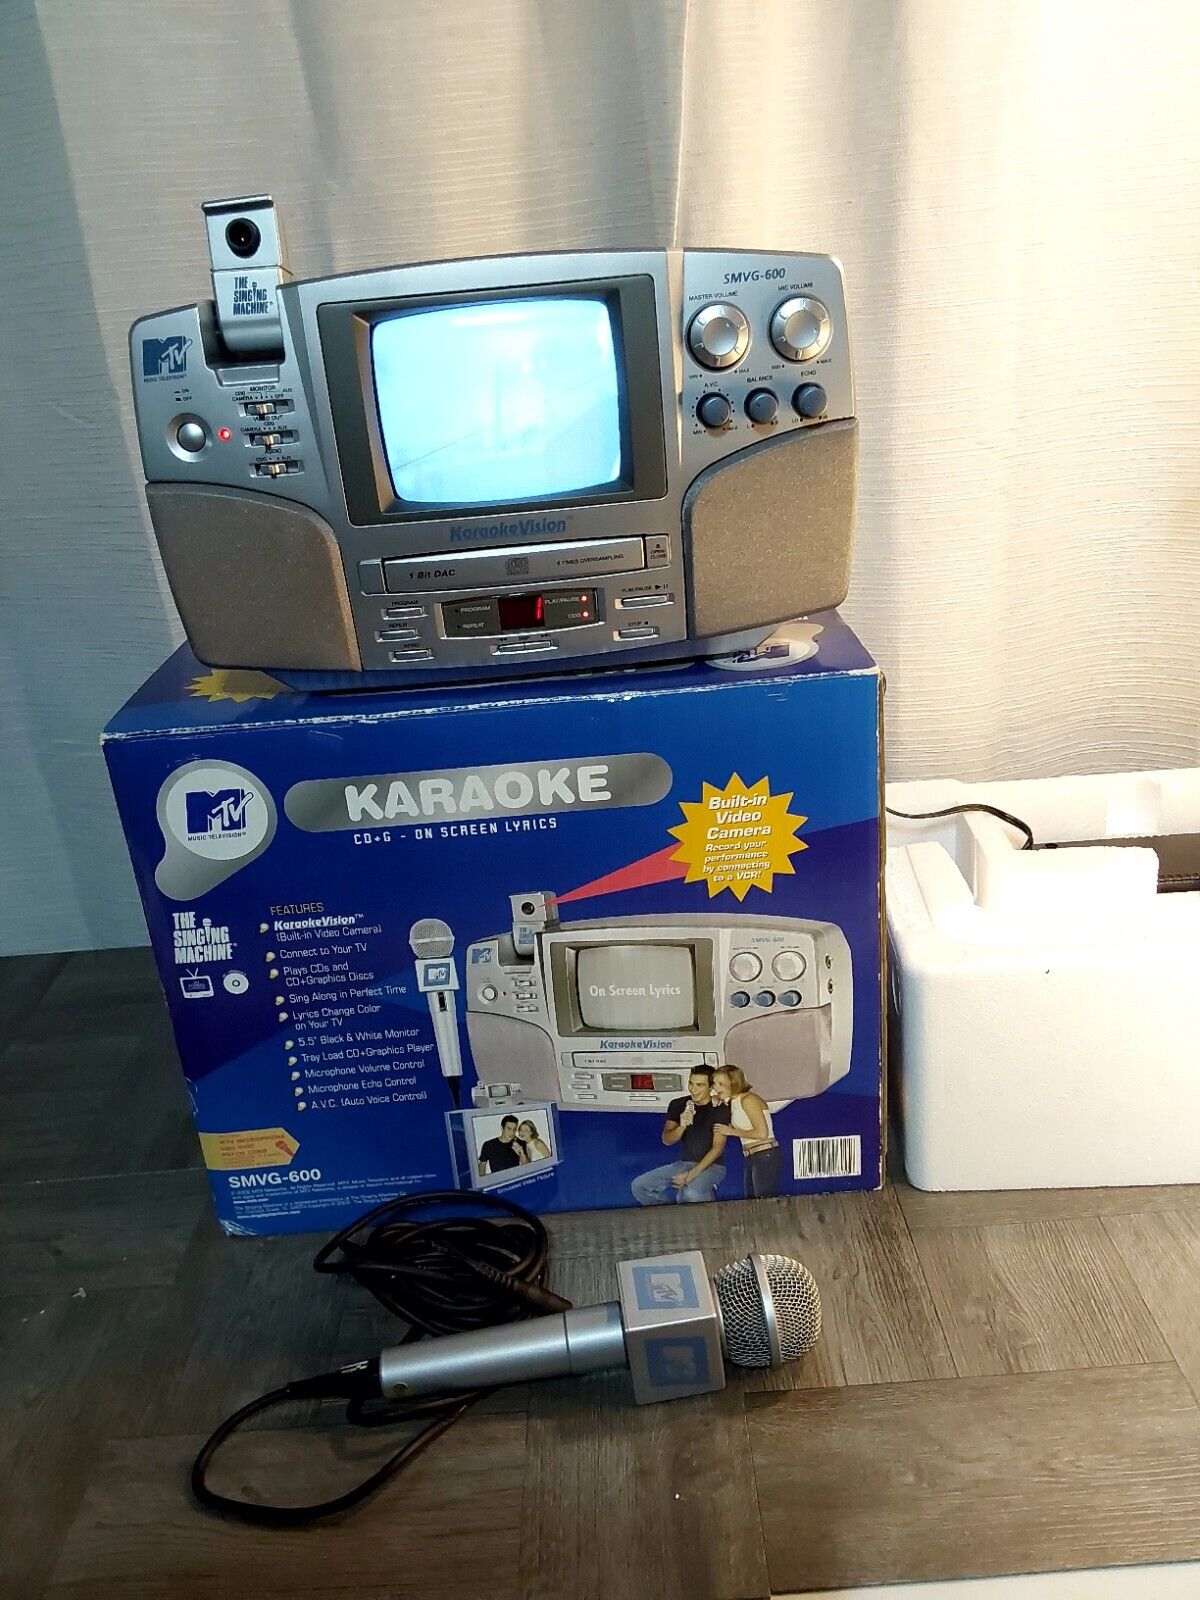 MTV Karaoke The Singing Machine Karaoke TV Works! Read Description